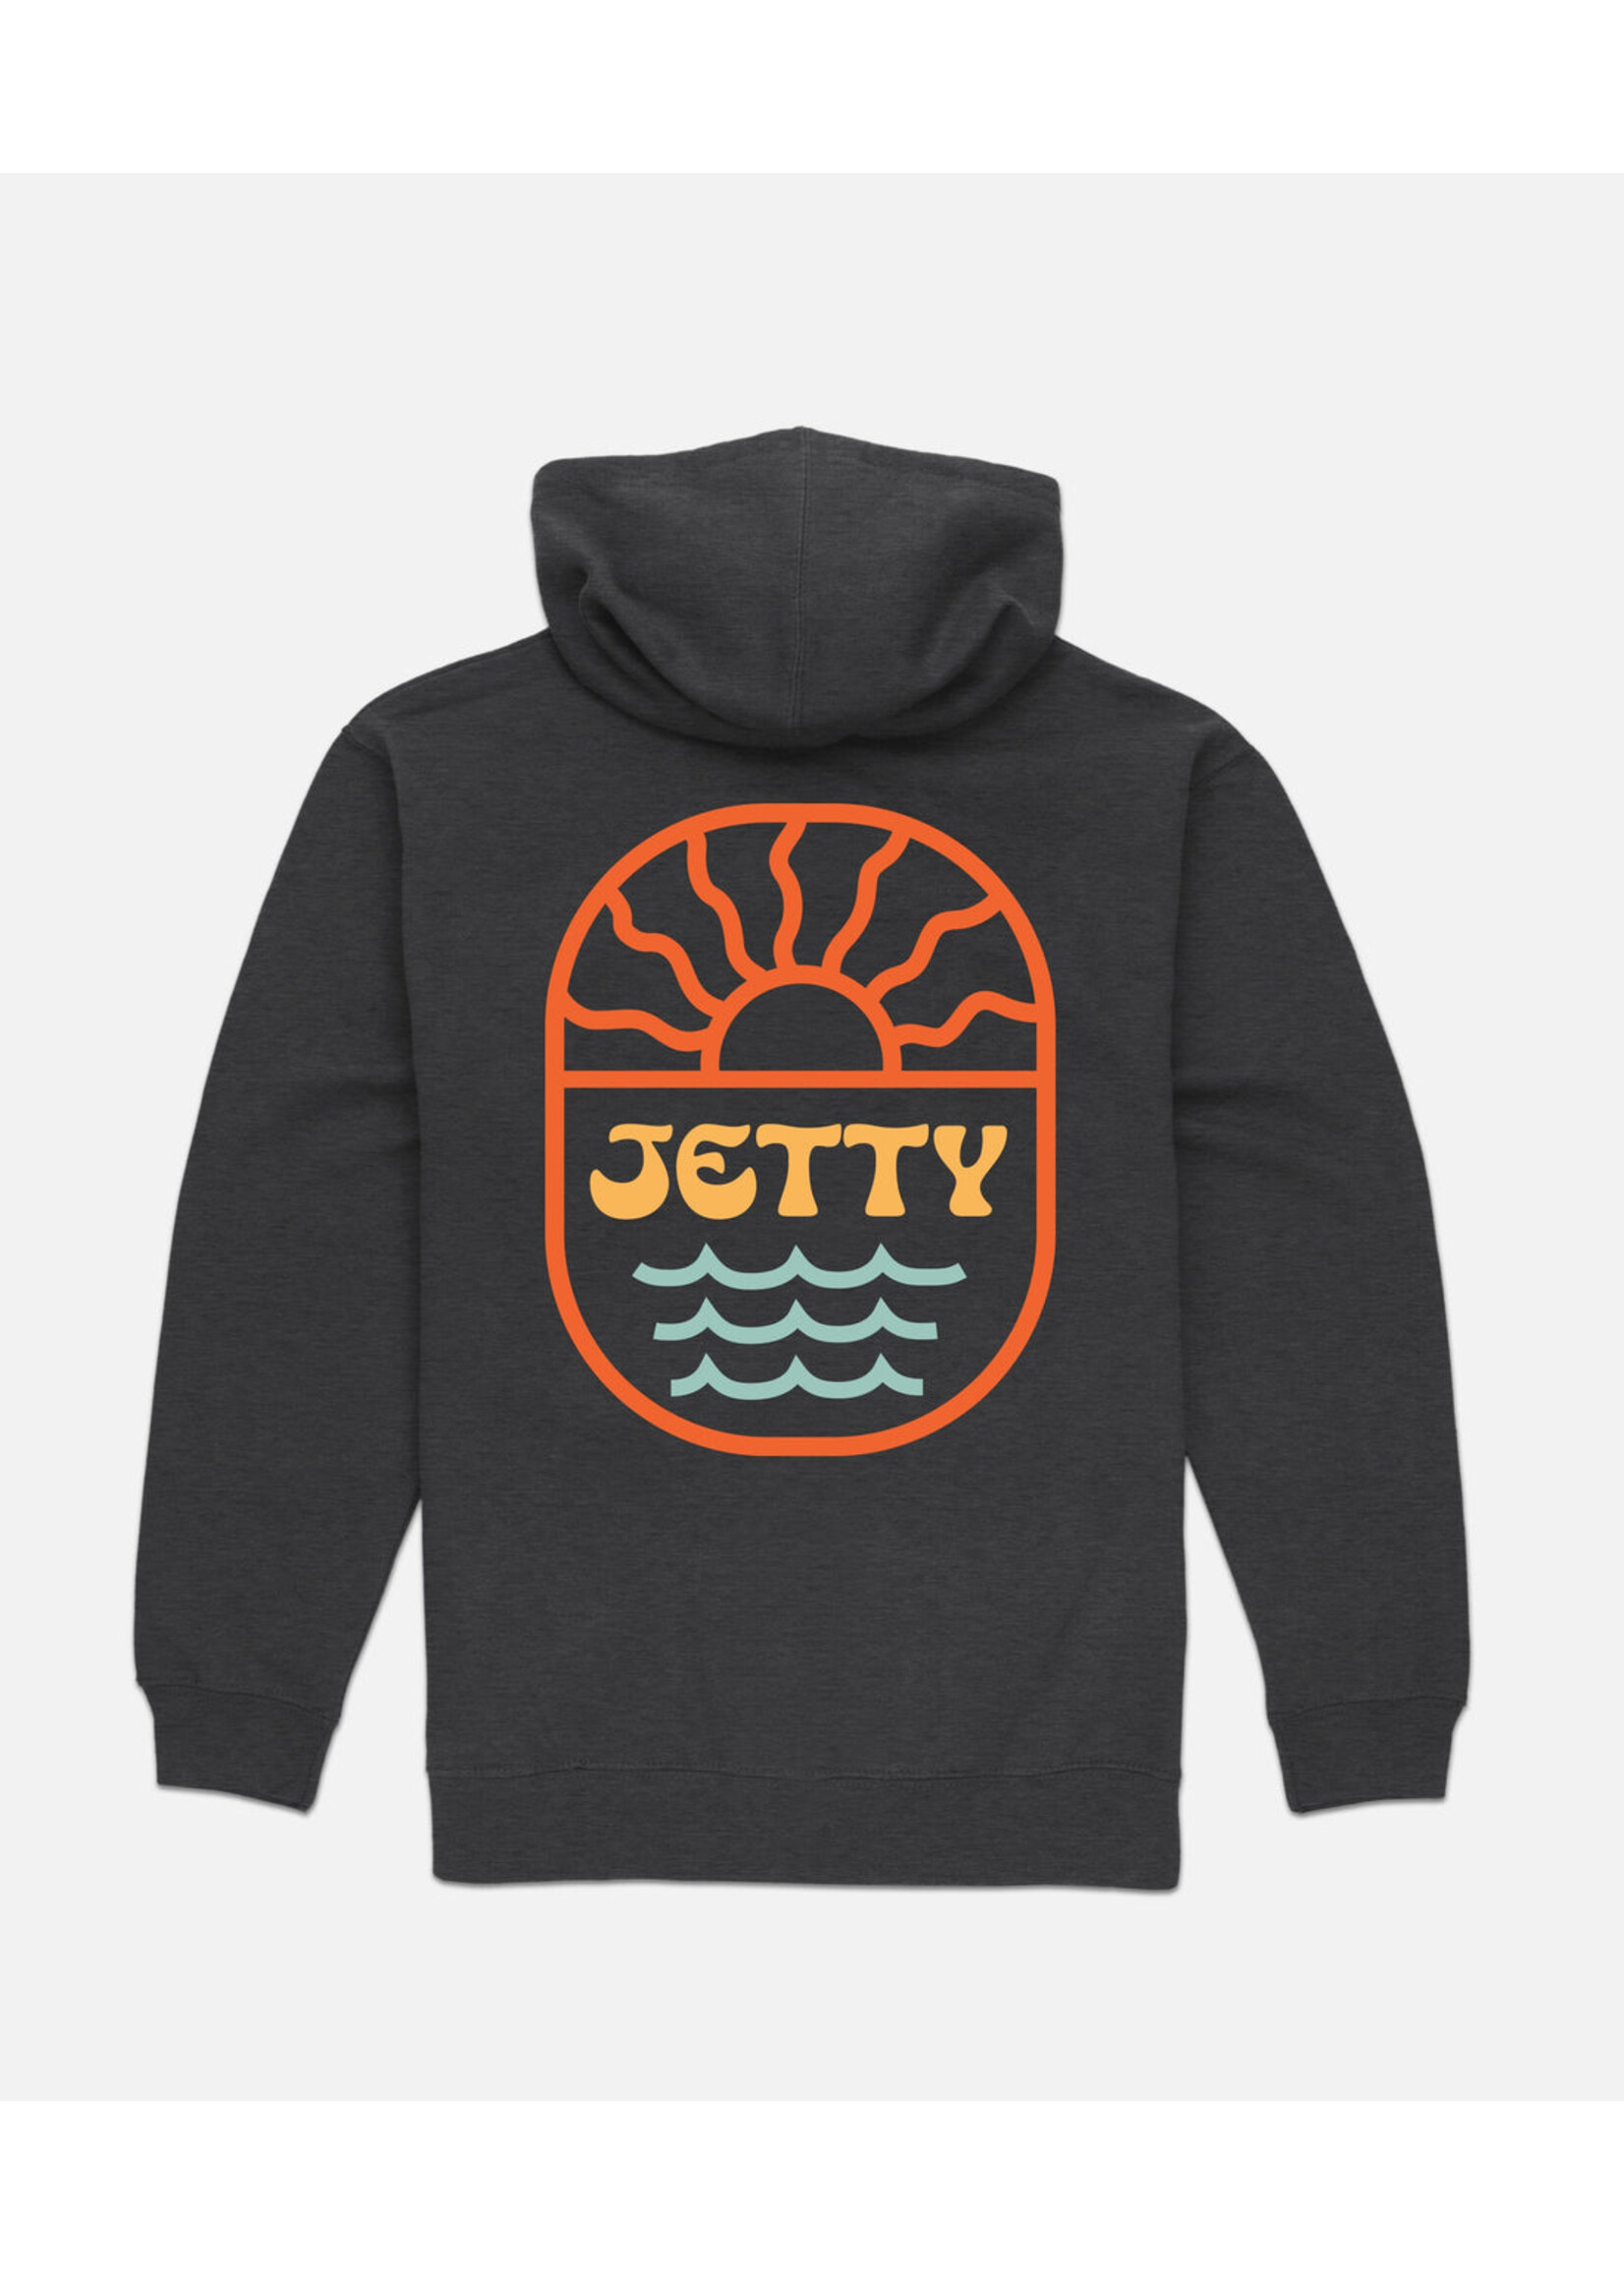 Jetty Jetty Seascape Youth Hoodie